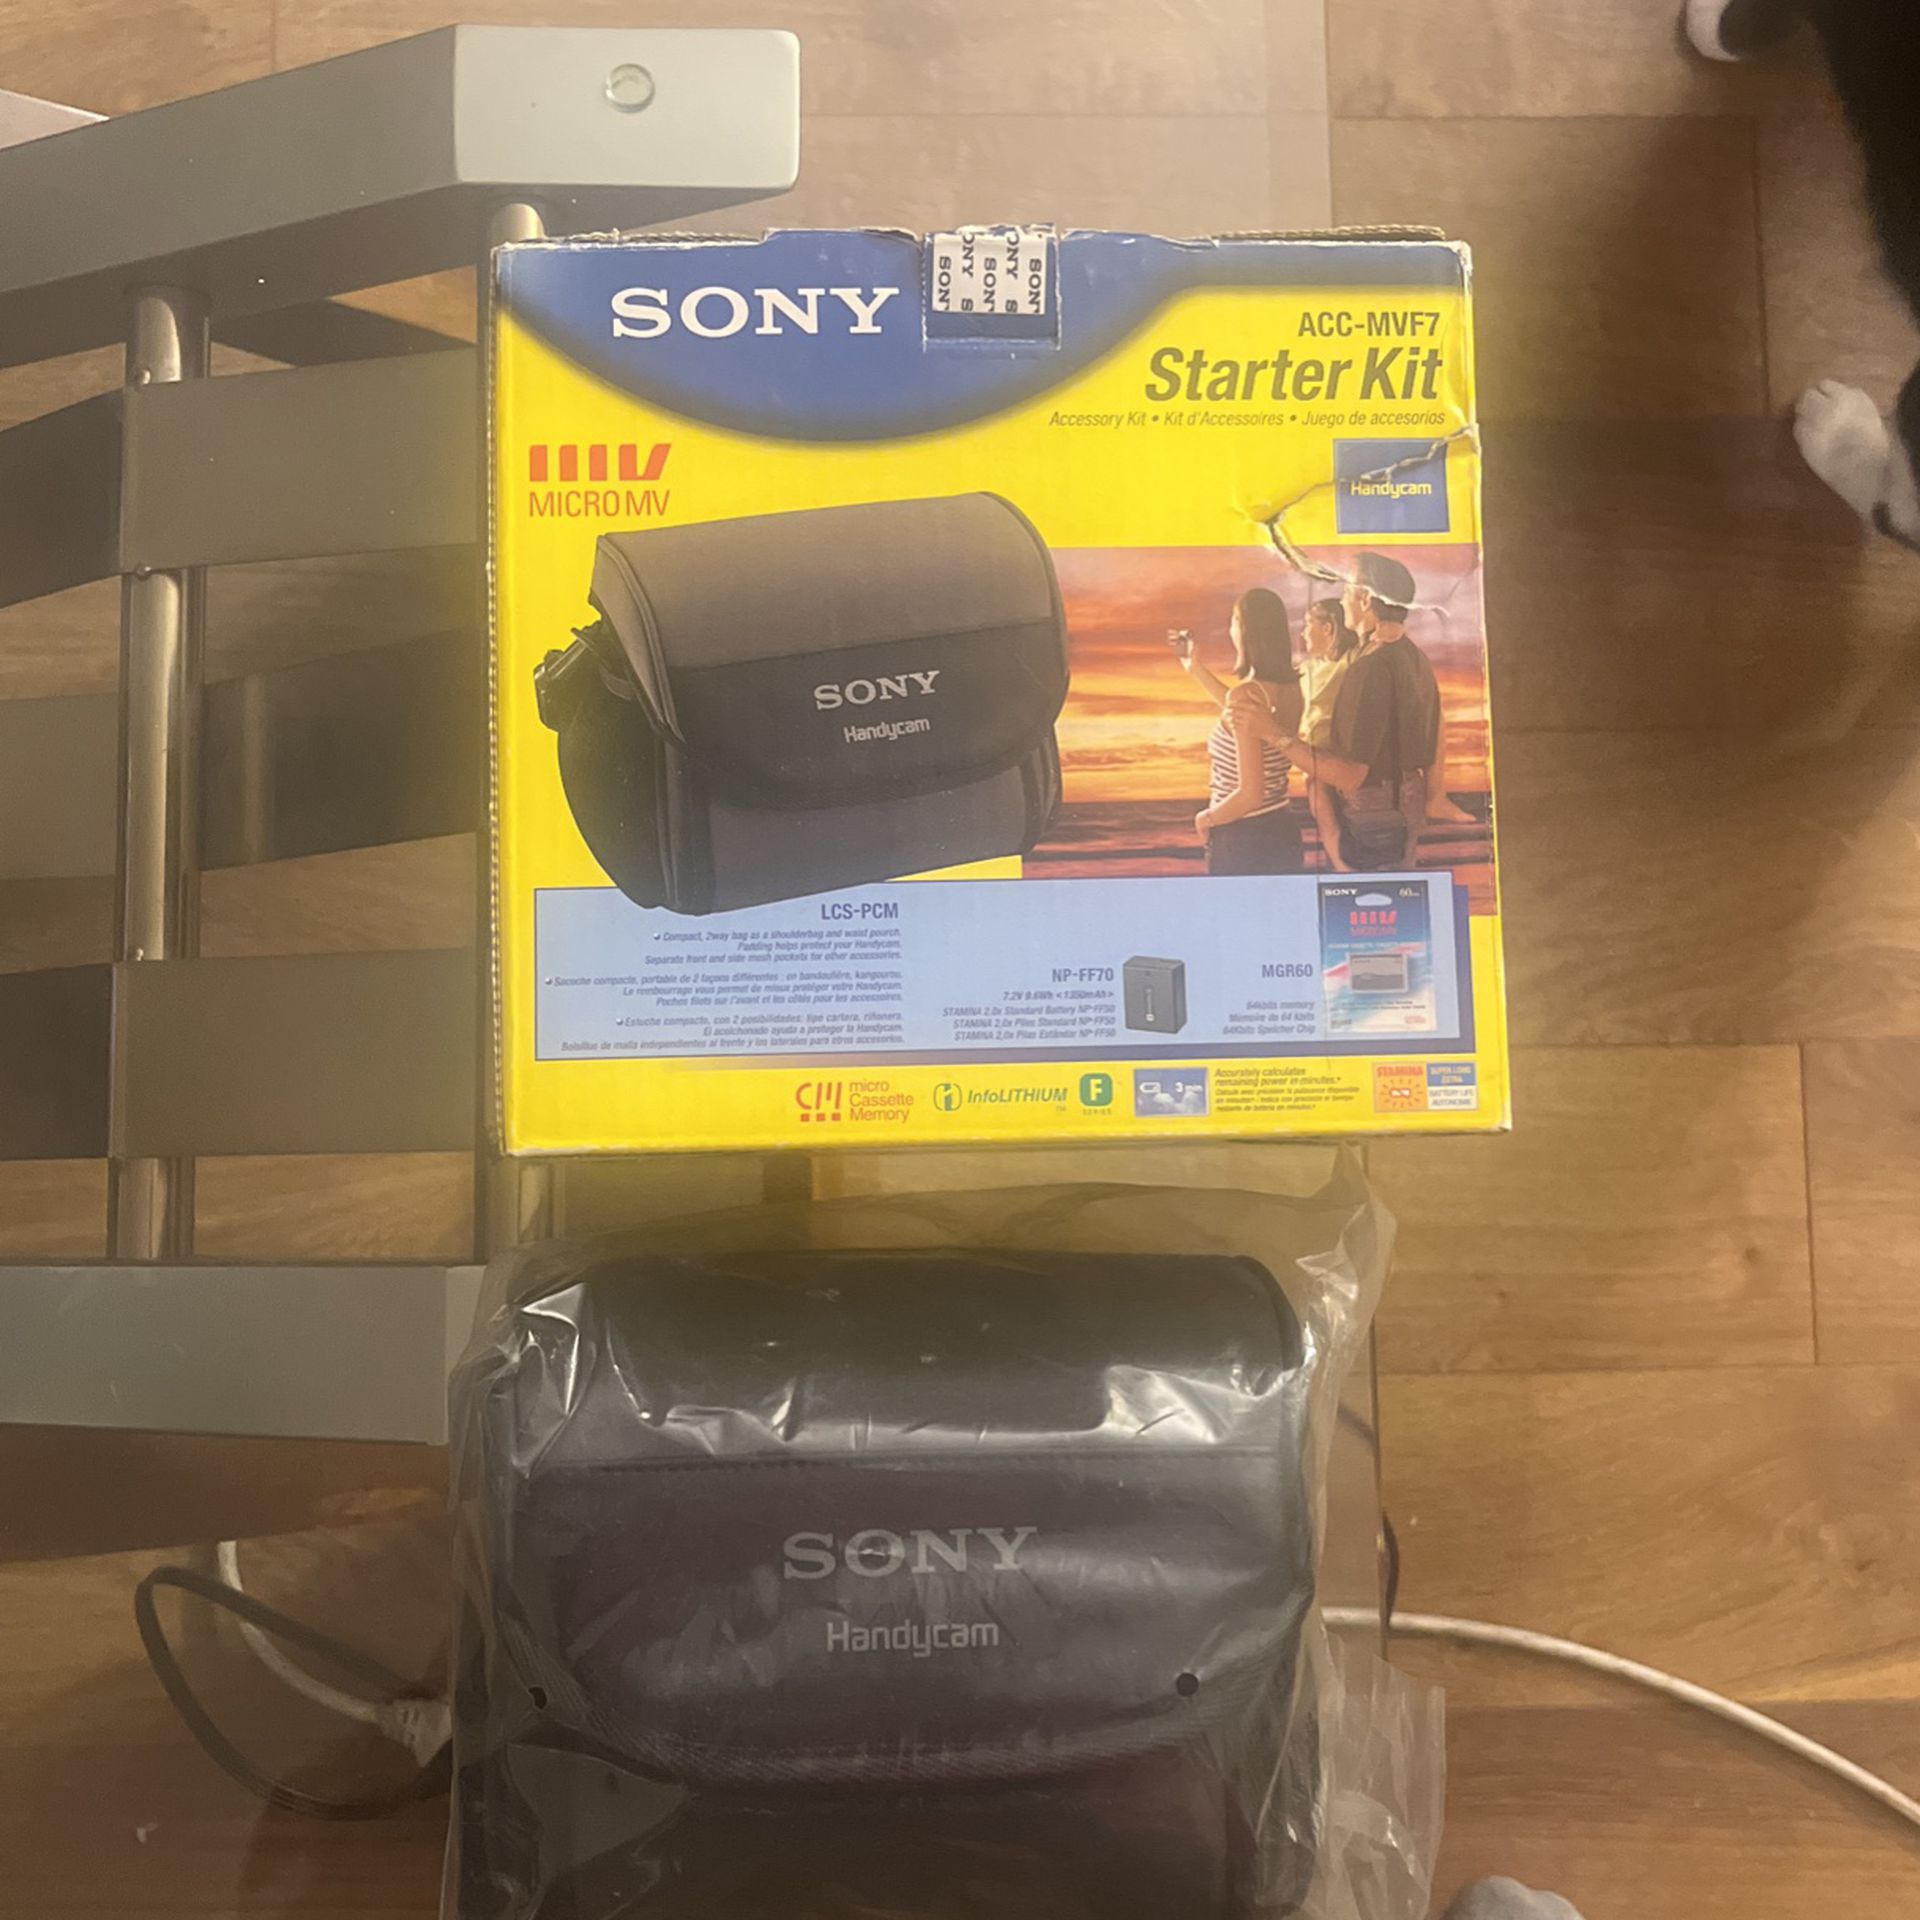 Sony ACC-MVF7 Starter Kit